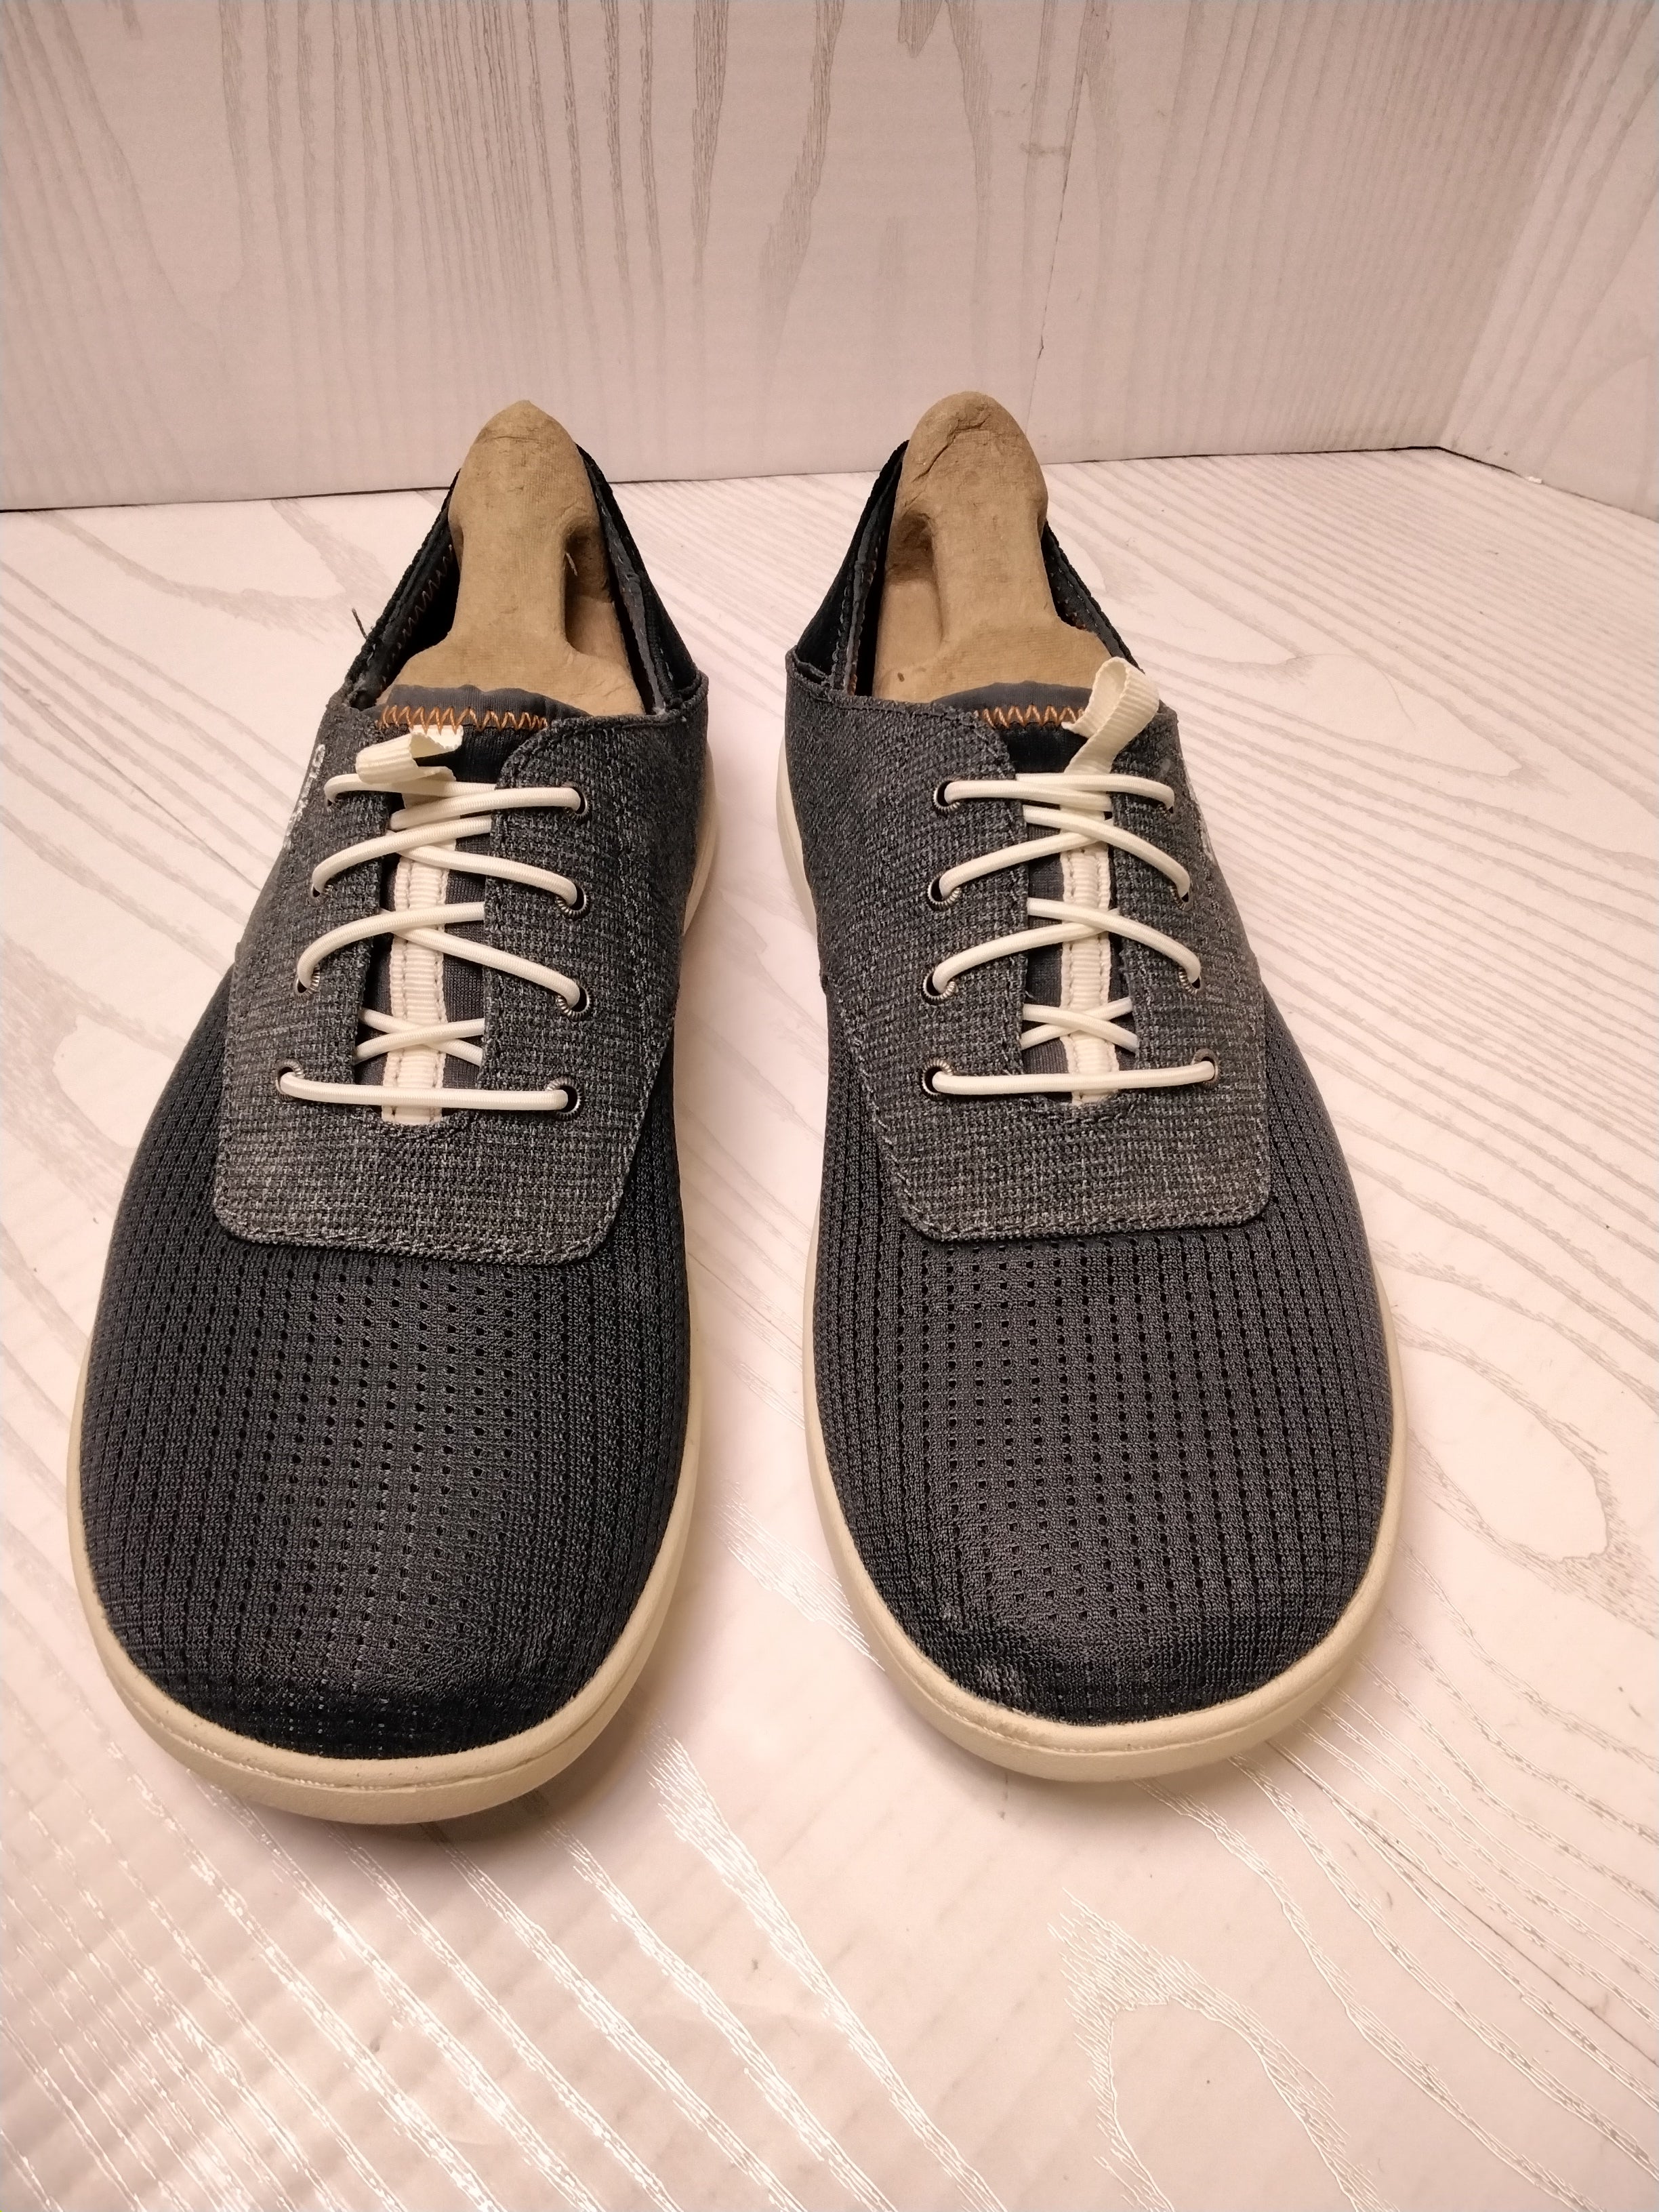 OLUKAI Men's Sneaker, Size 7 (7774358438126)